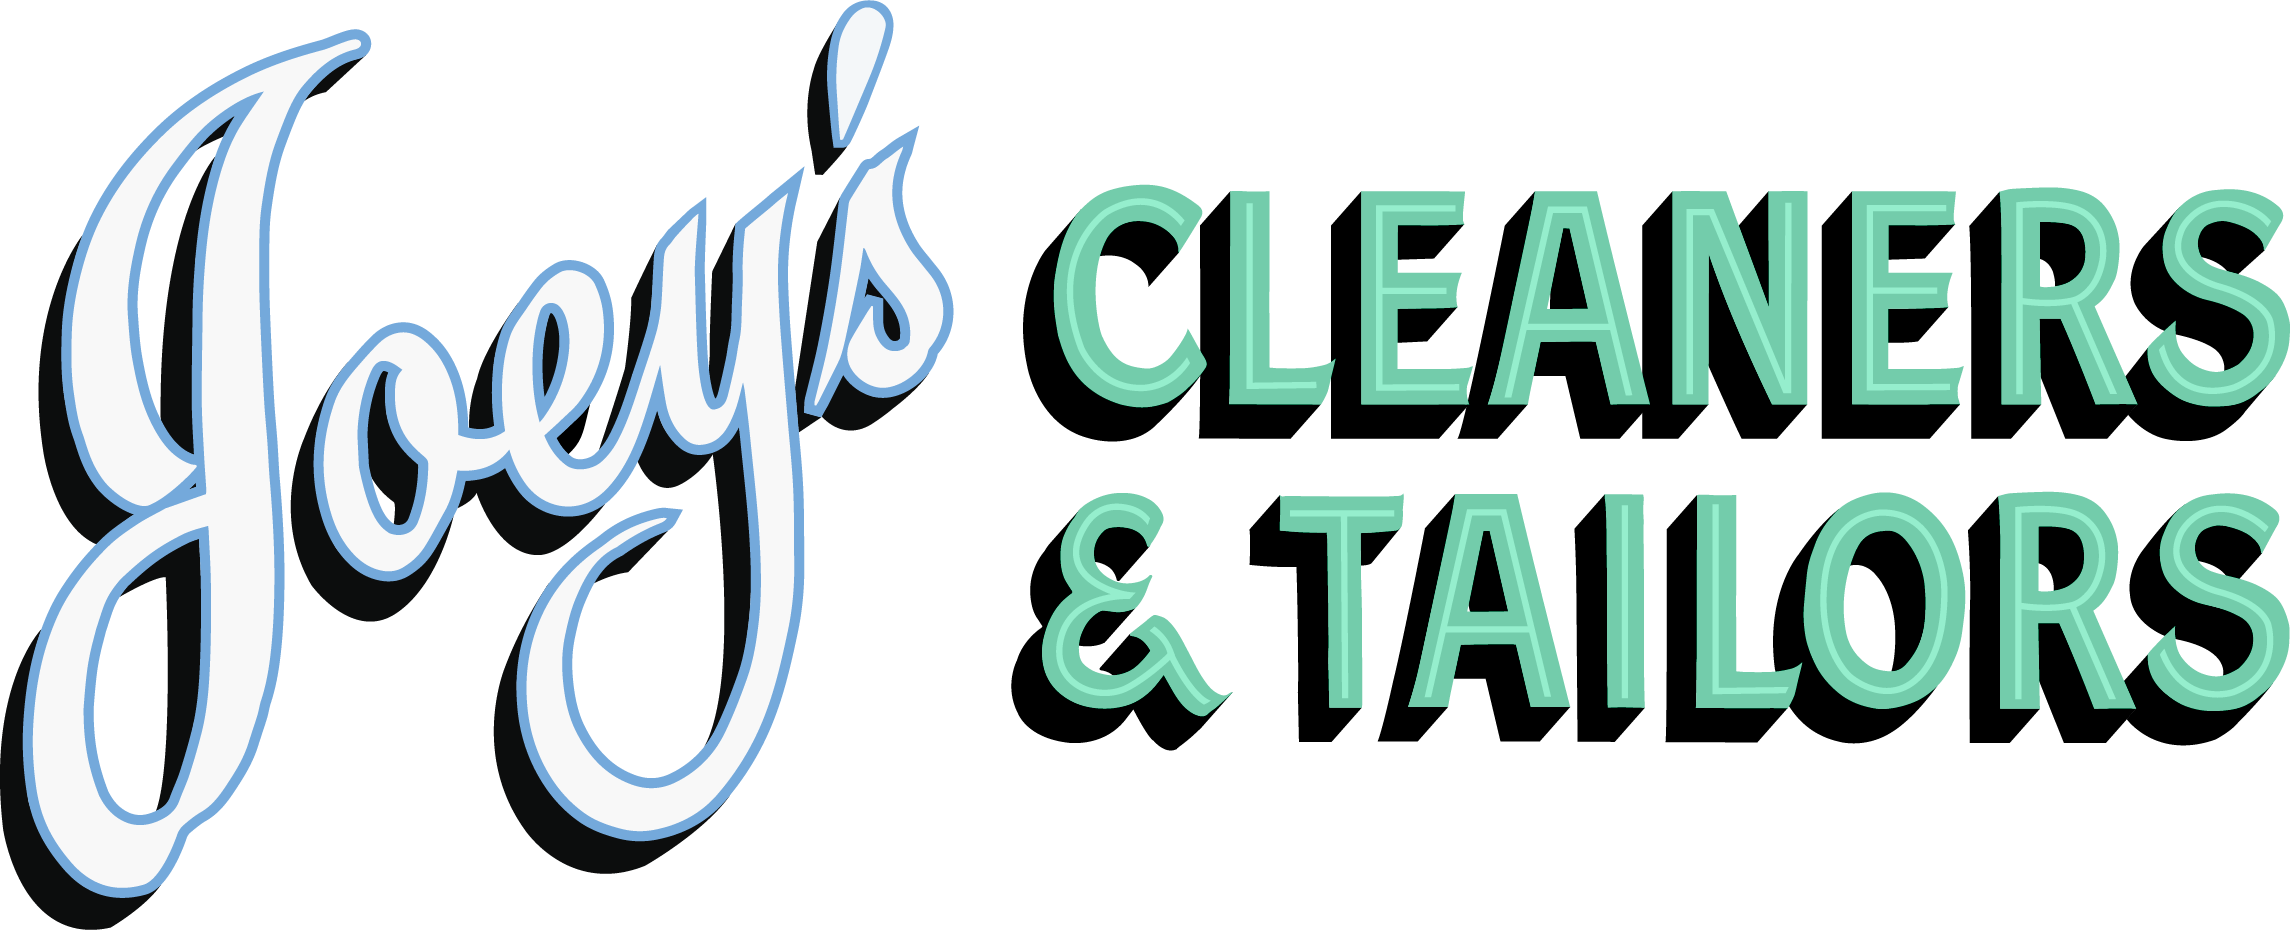 Joey's Cleaners